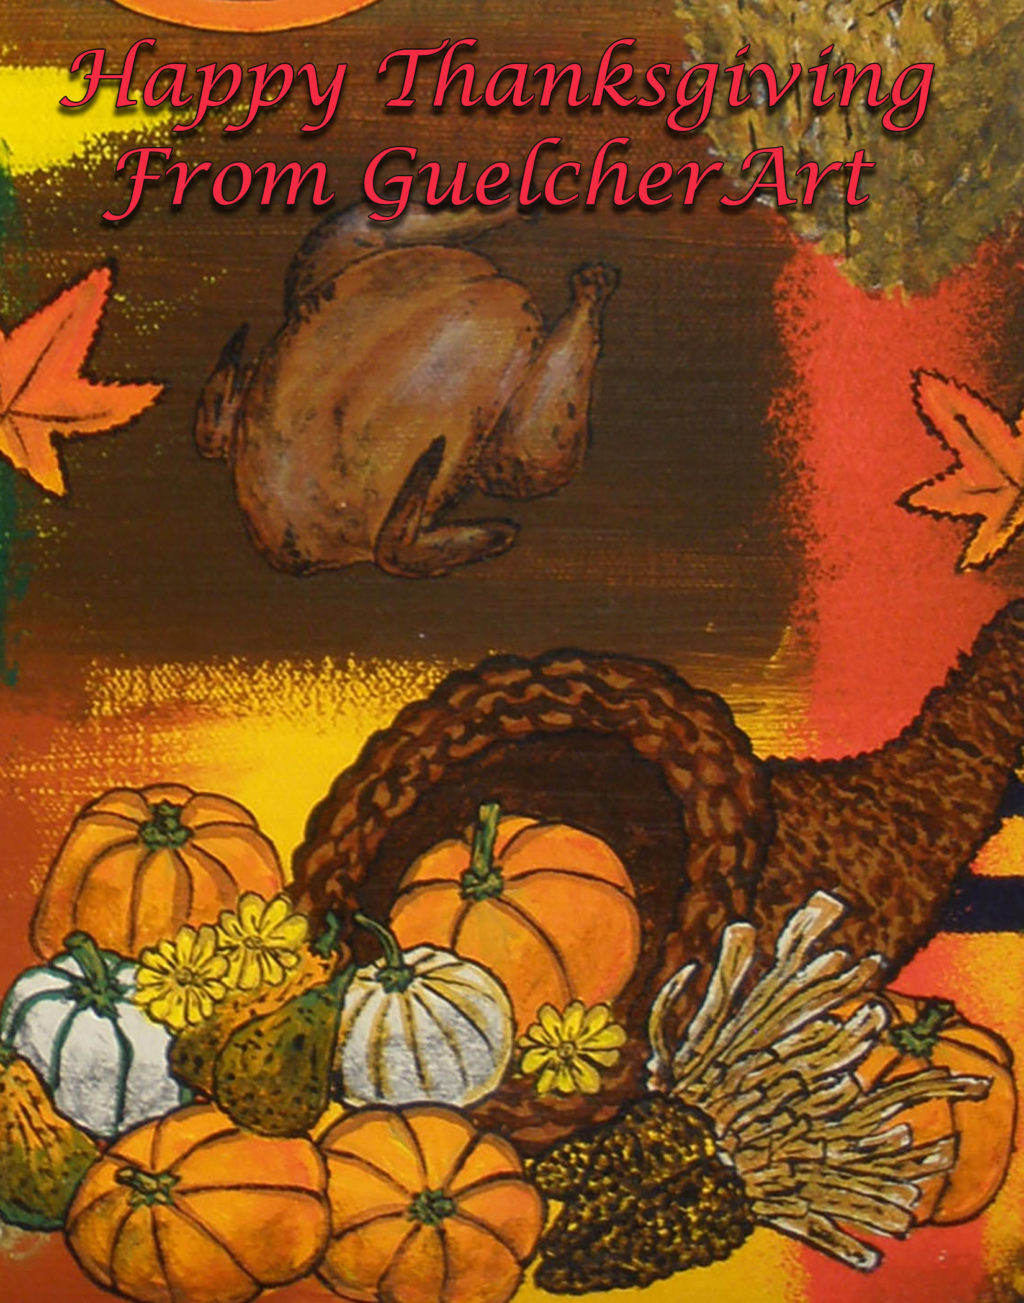 Happy Thanksgiving from GuelcherArt!